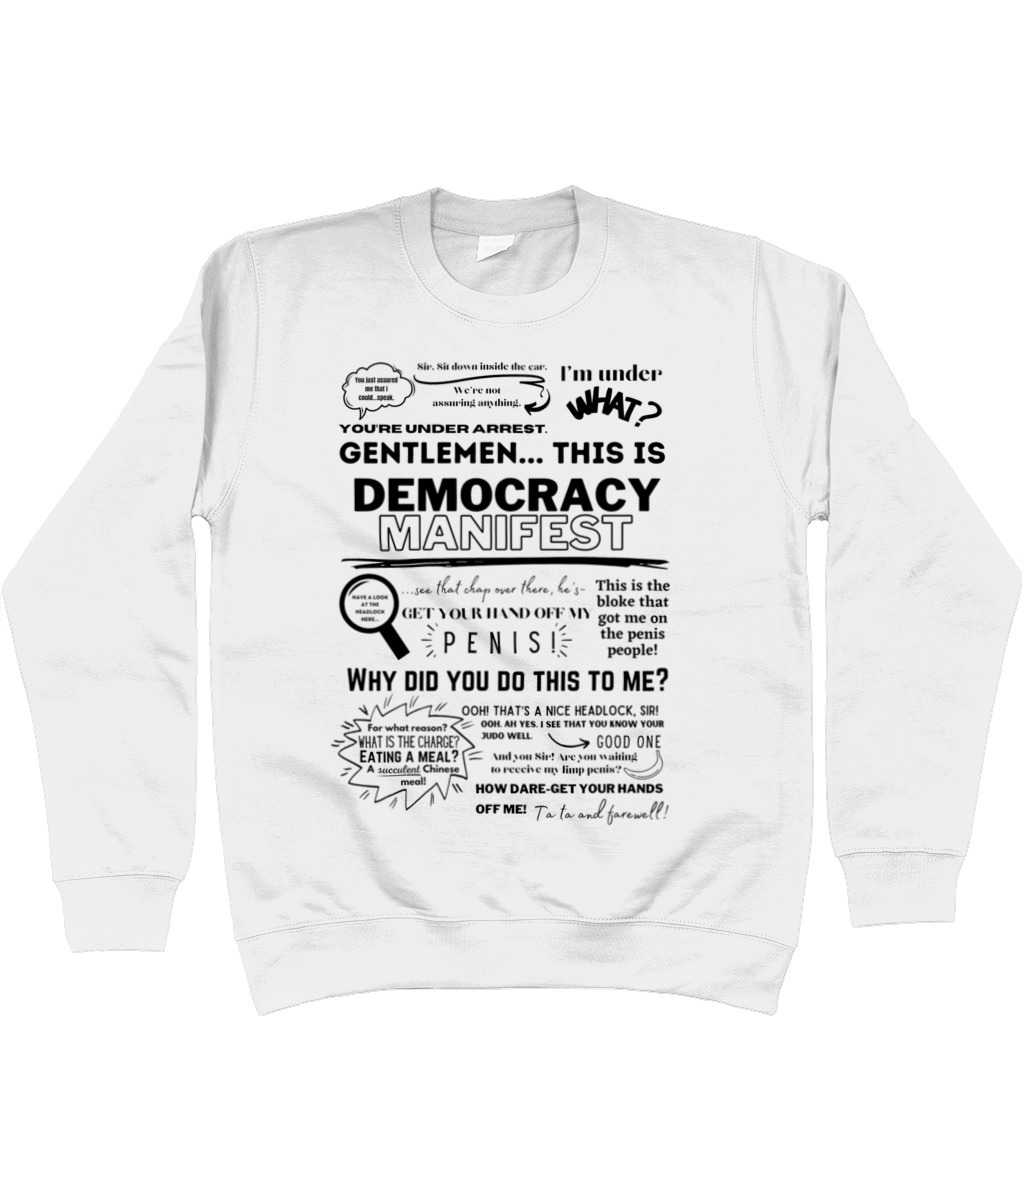 This is Democracy Manifest Sweatshirt